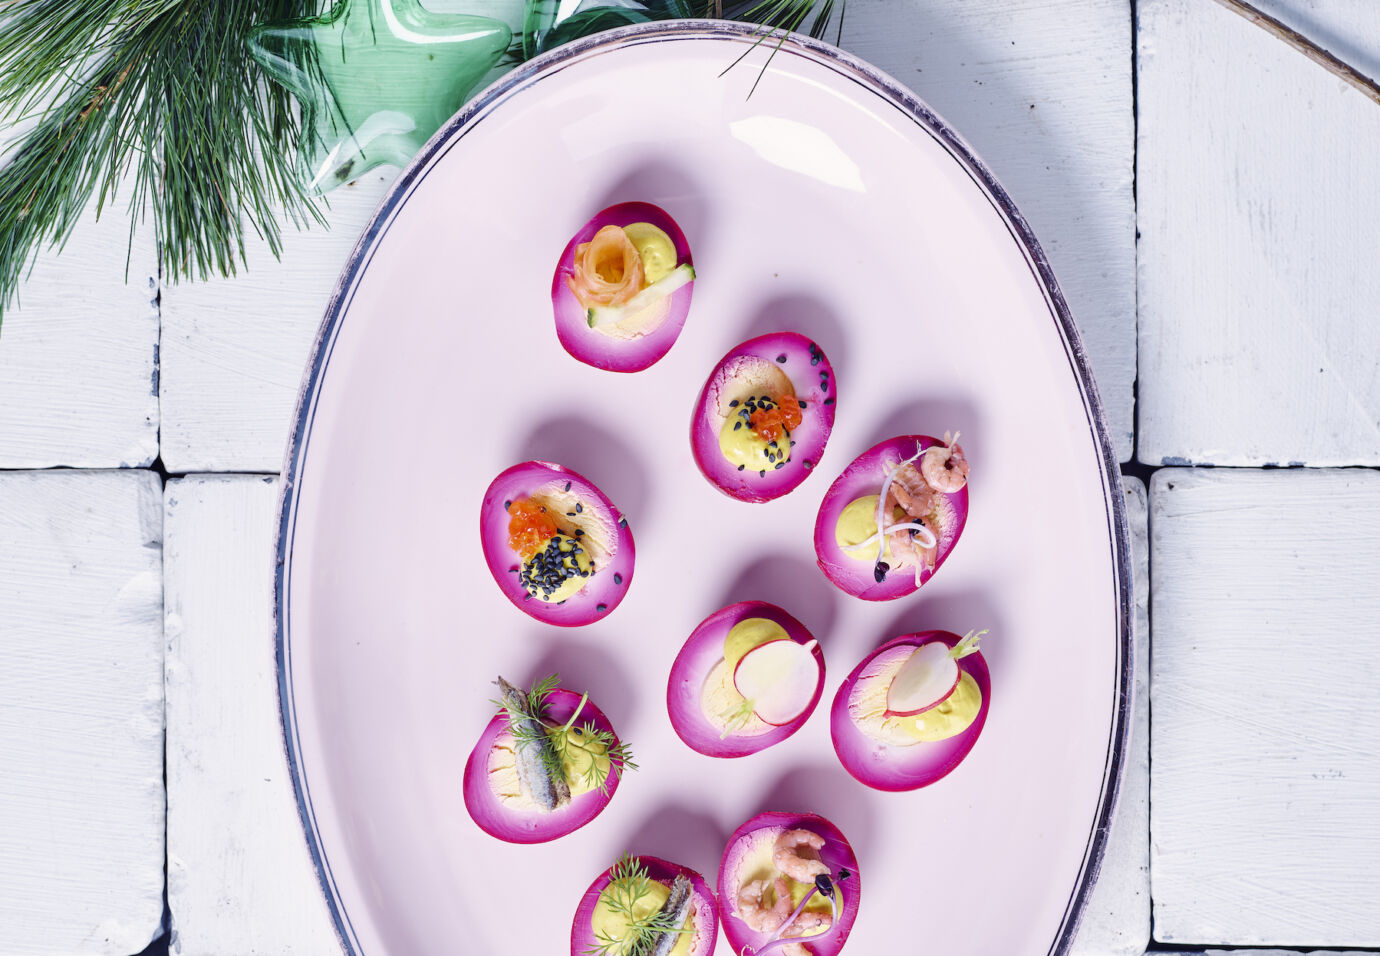 Pickled eggs met feest toppings door Sofie Dumont